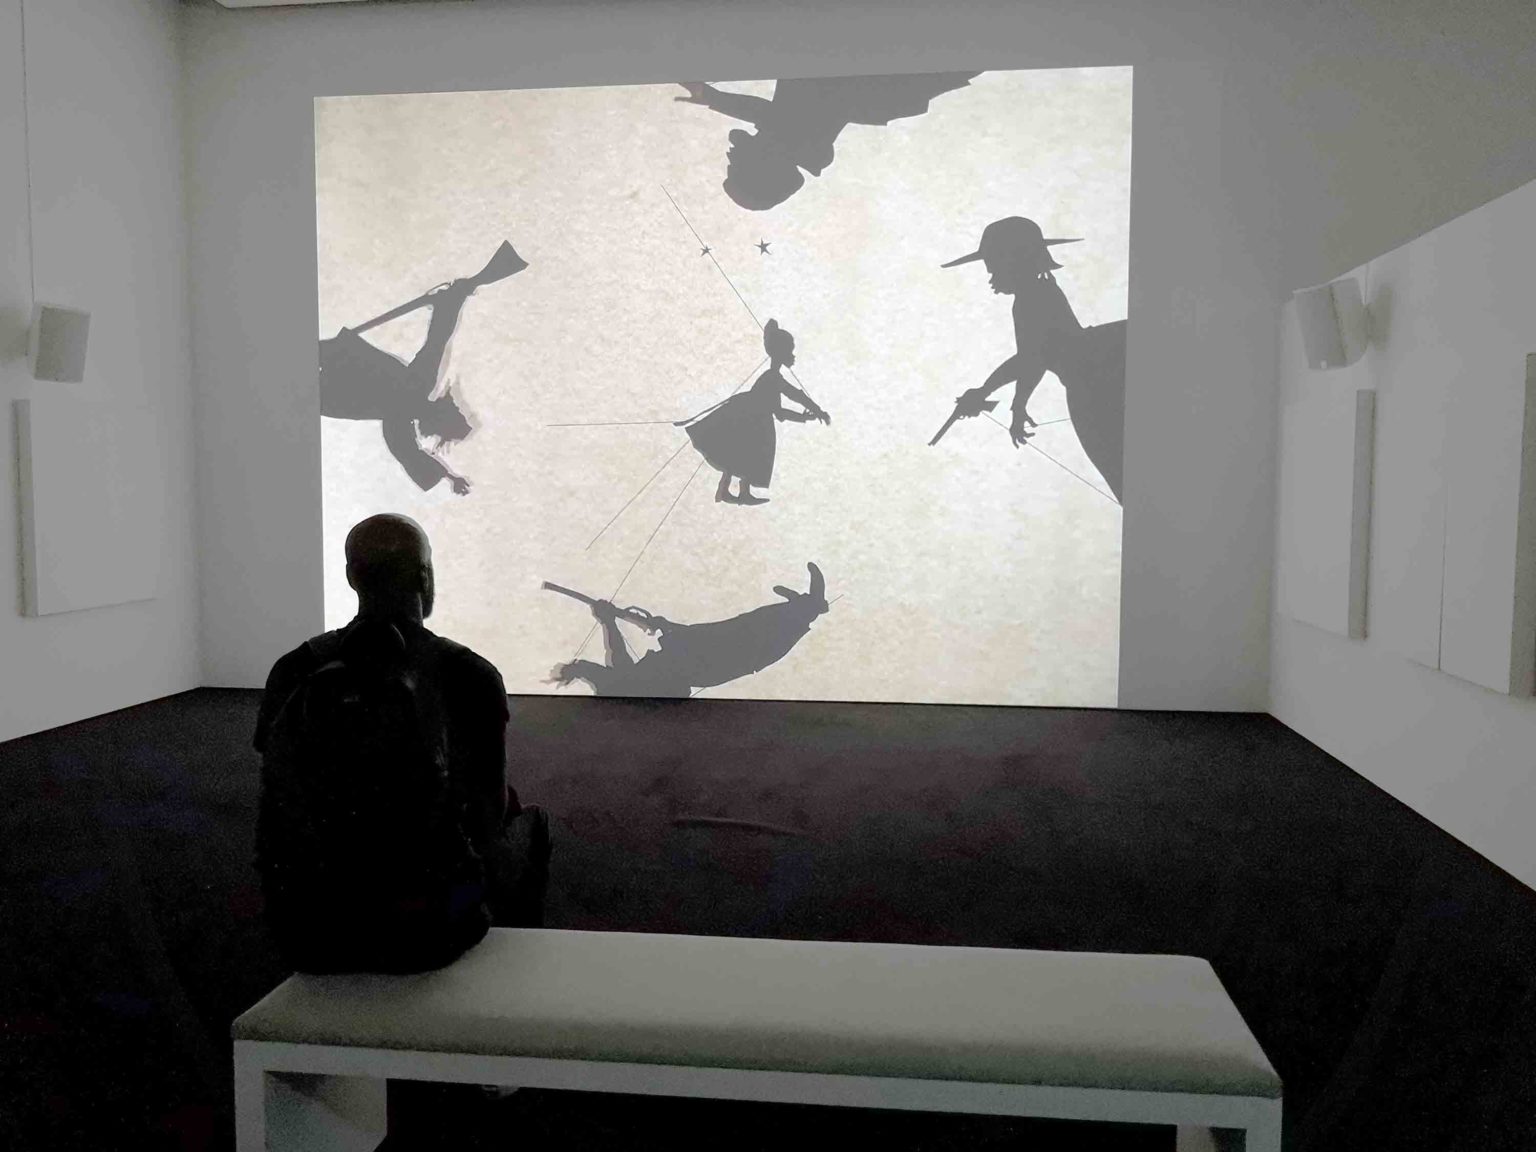 Kara Walker's hand-cut projected silhouettes